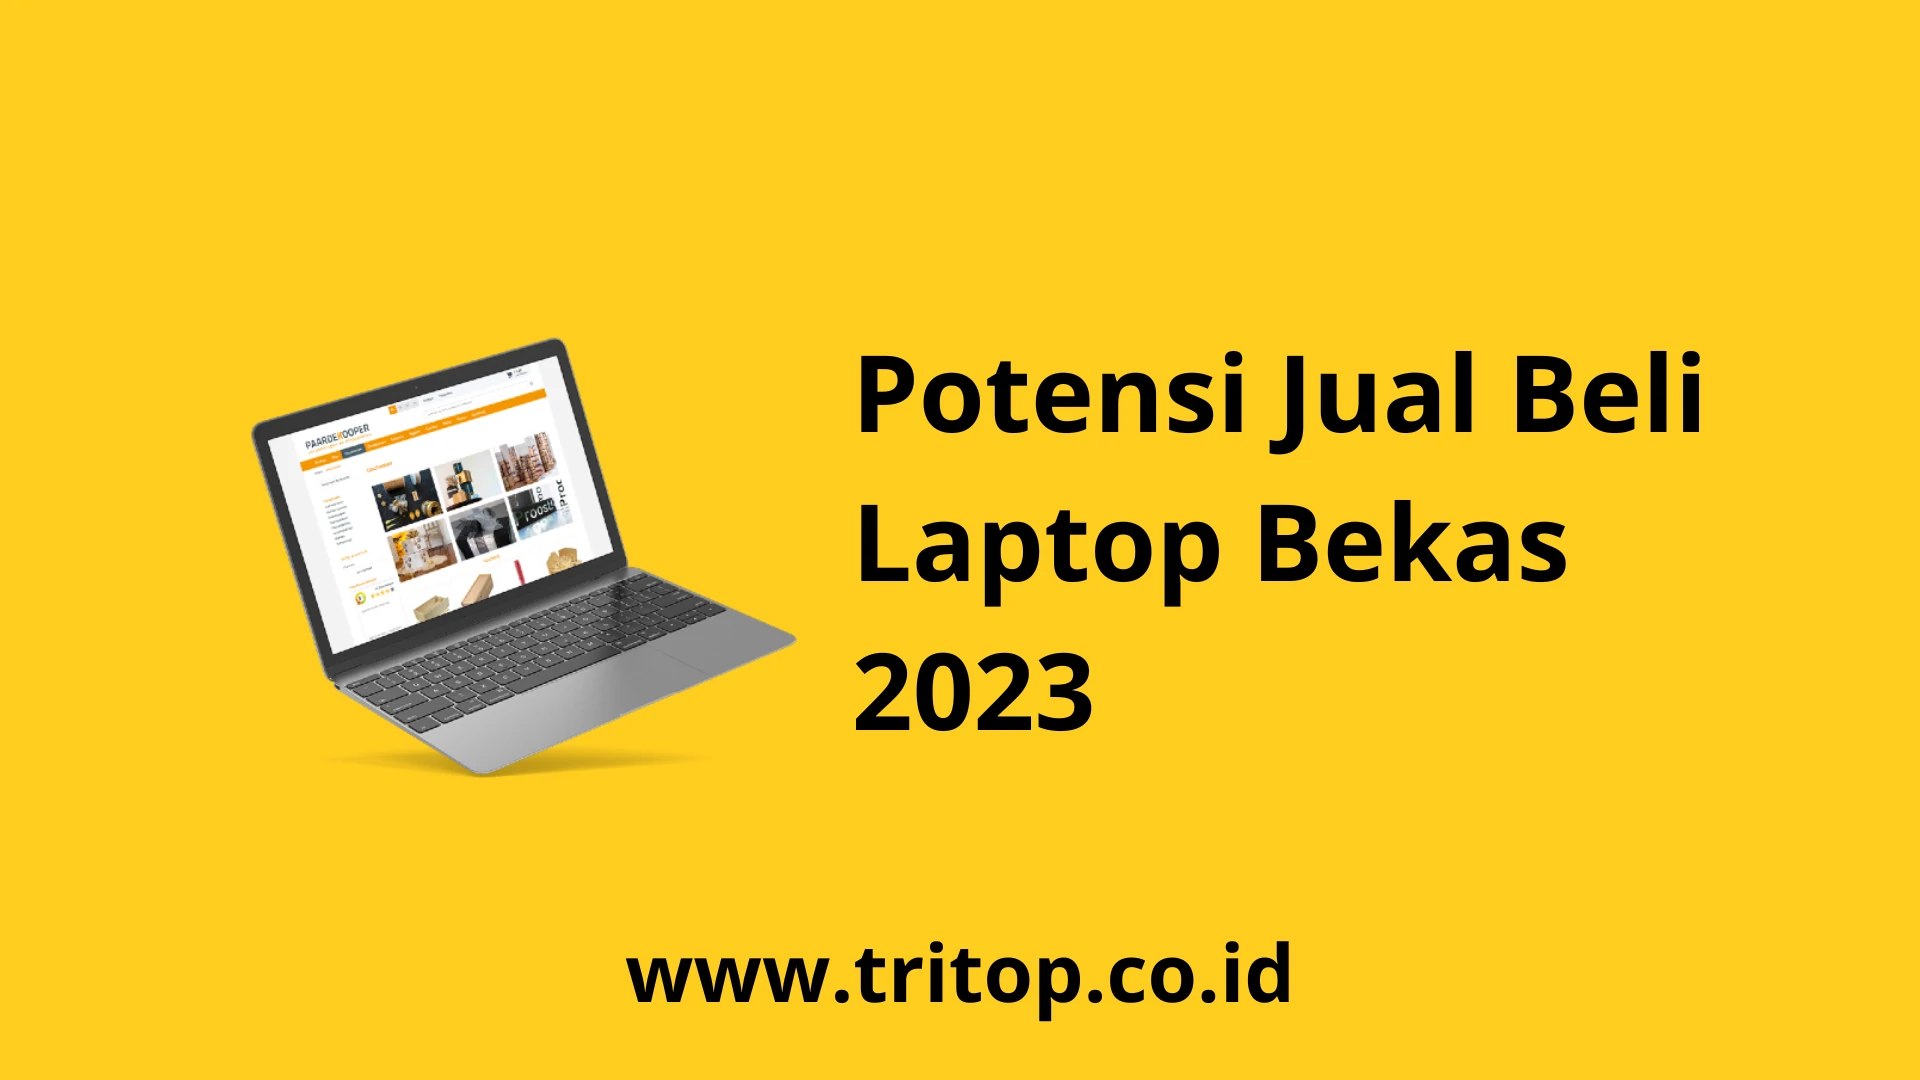 Jual Beli Laptop Bekas Bandung 2023 Tritop.co.id